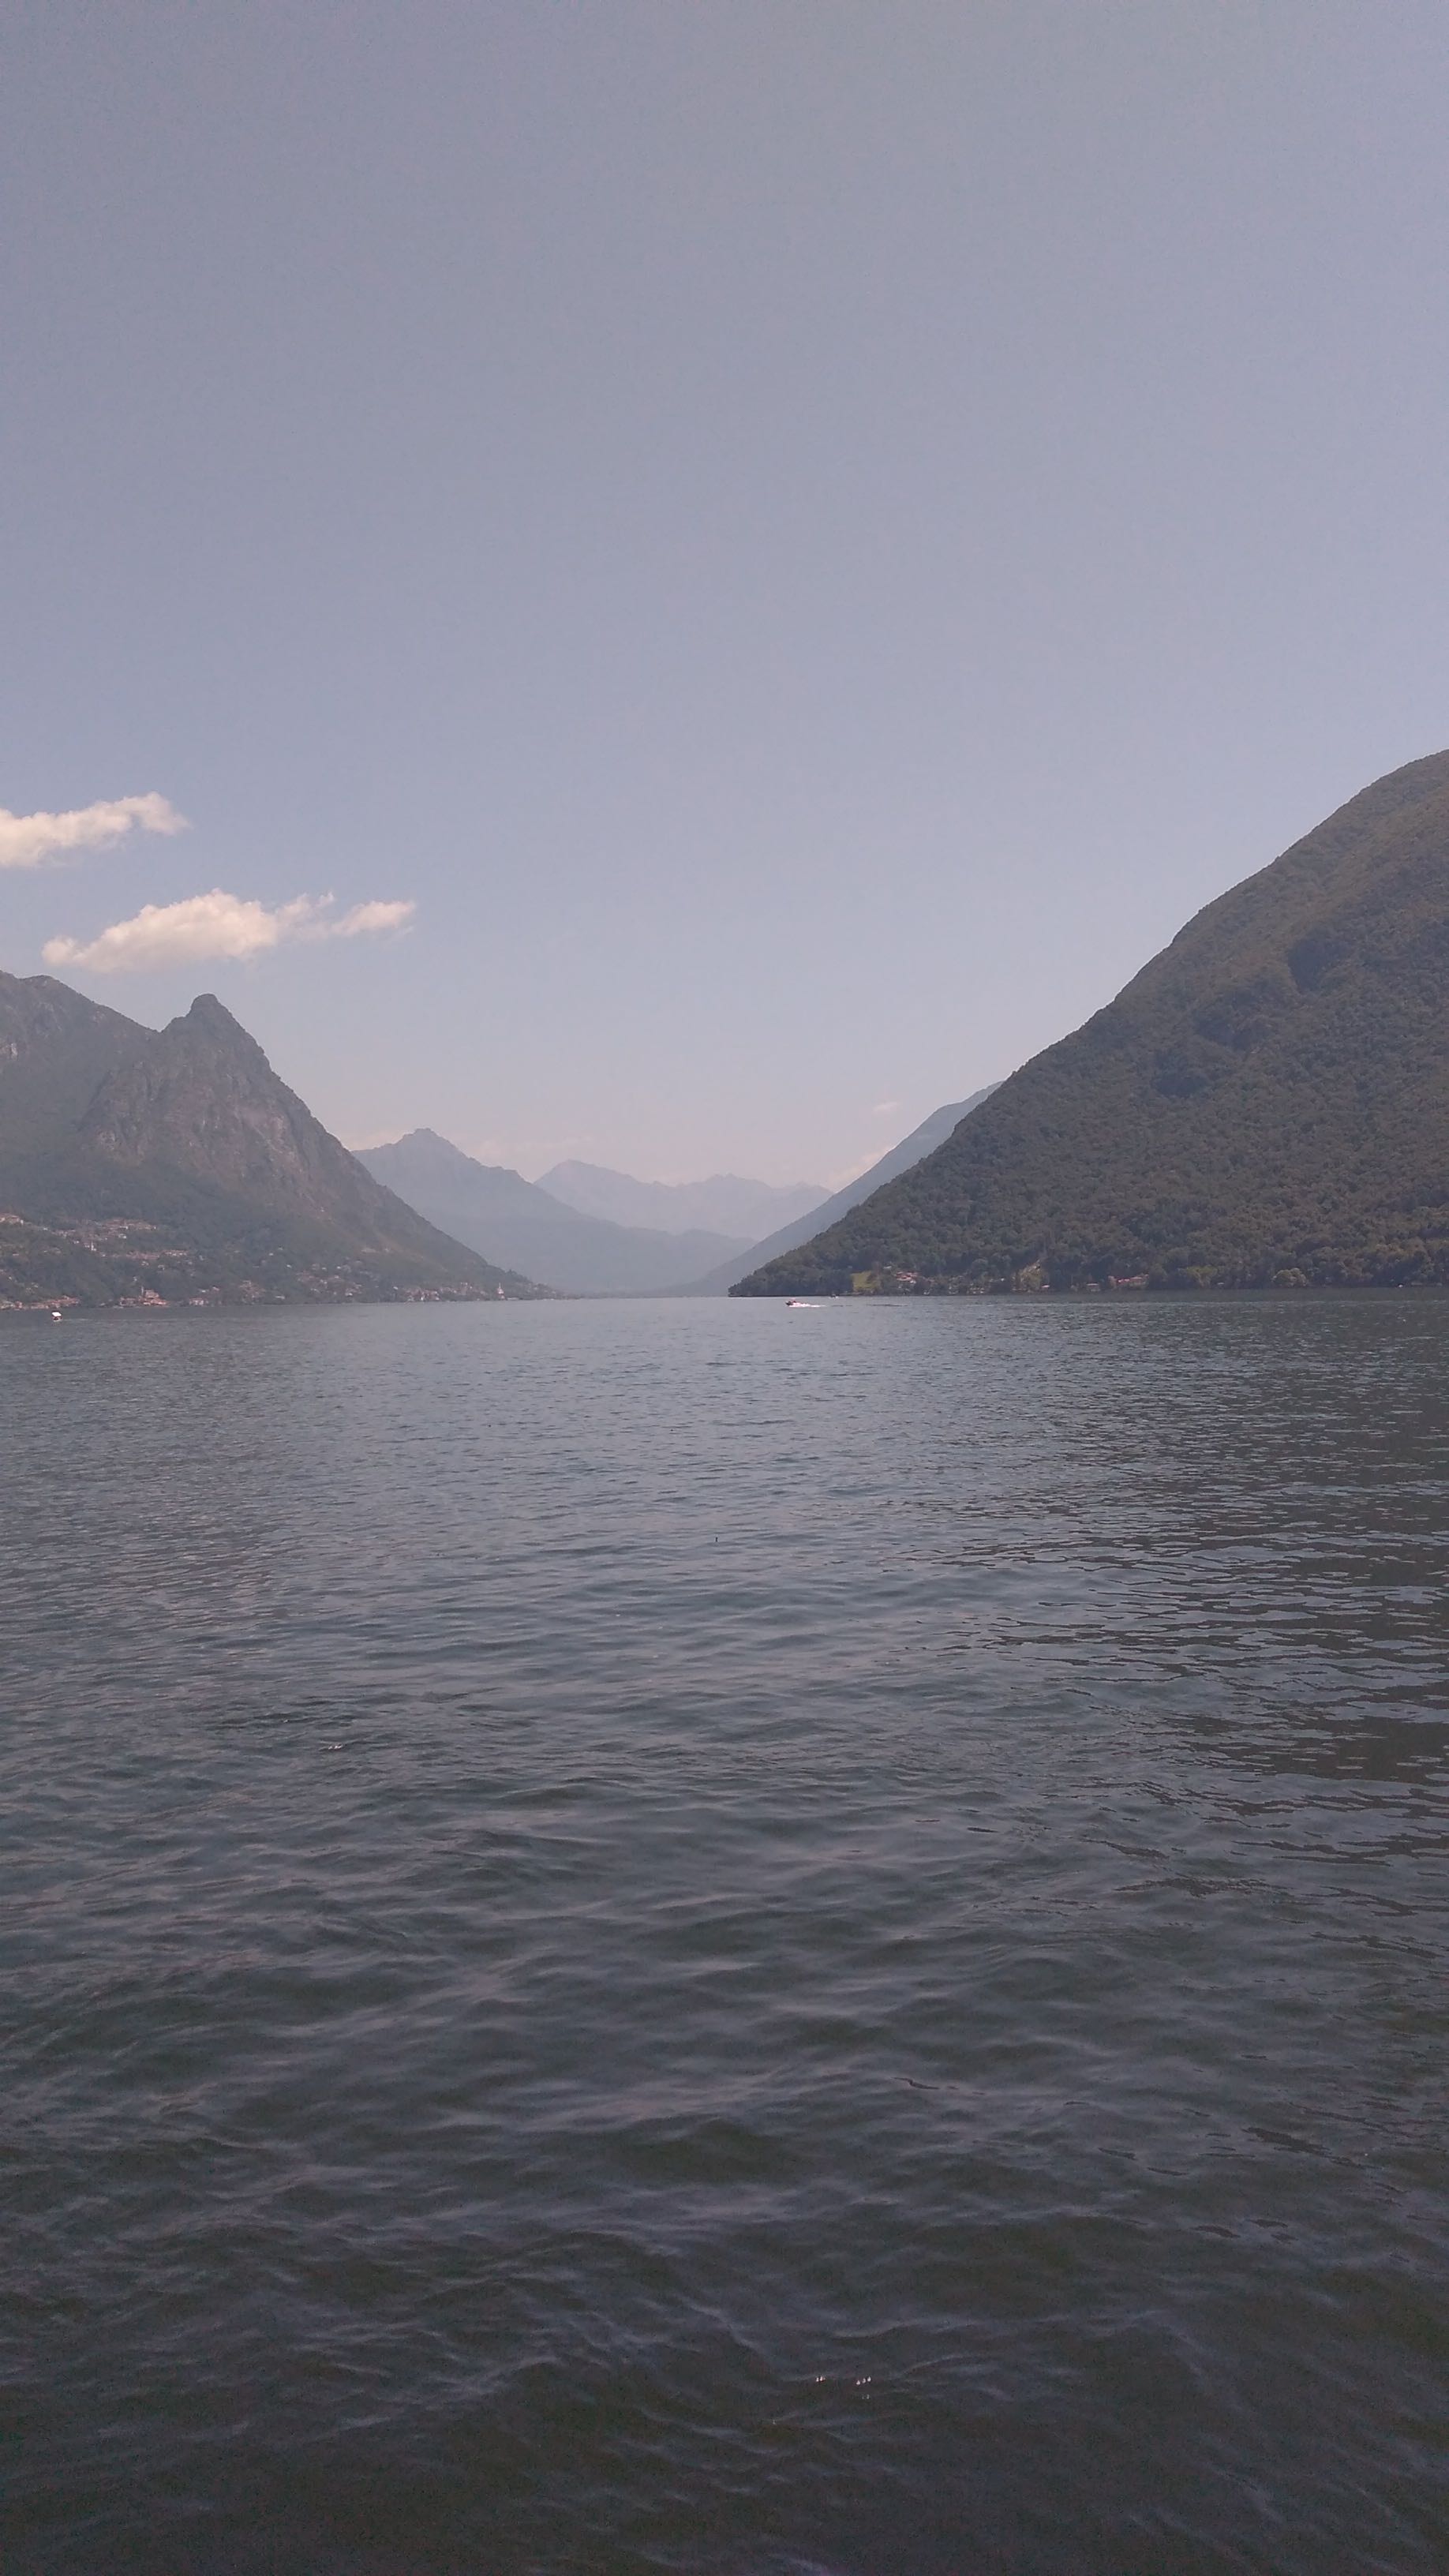 Swiss Mountain Lake